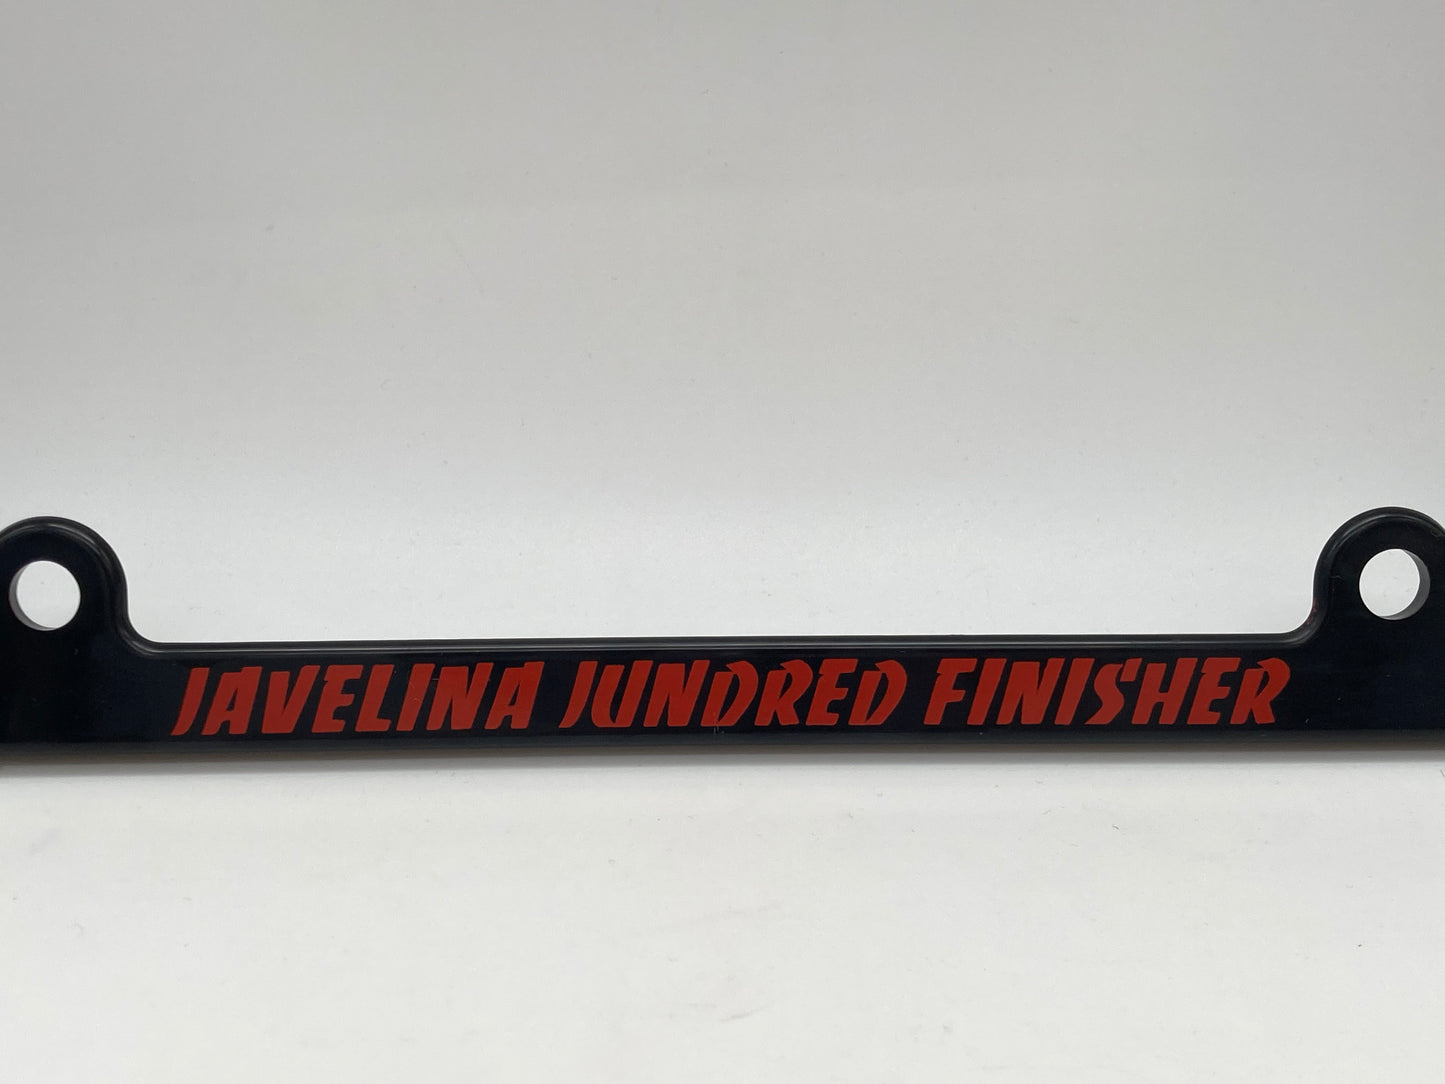 Javelina Jundred Finisher License Plate Frame